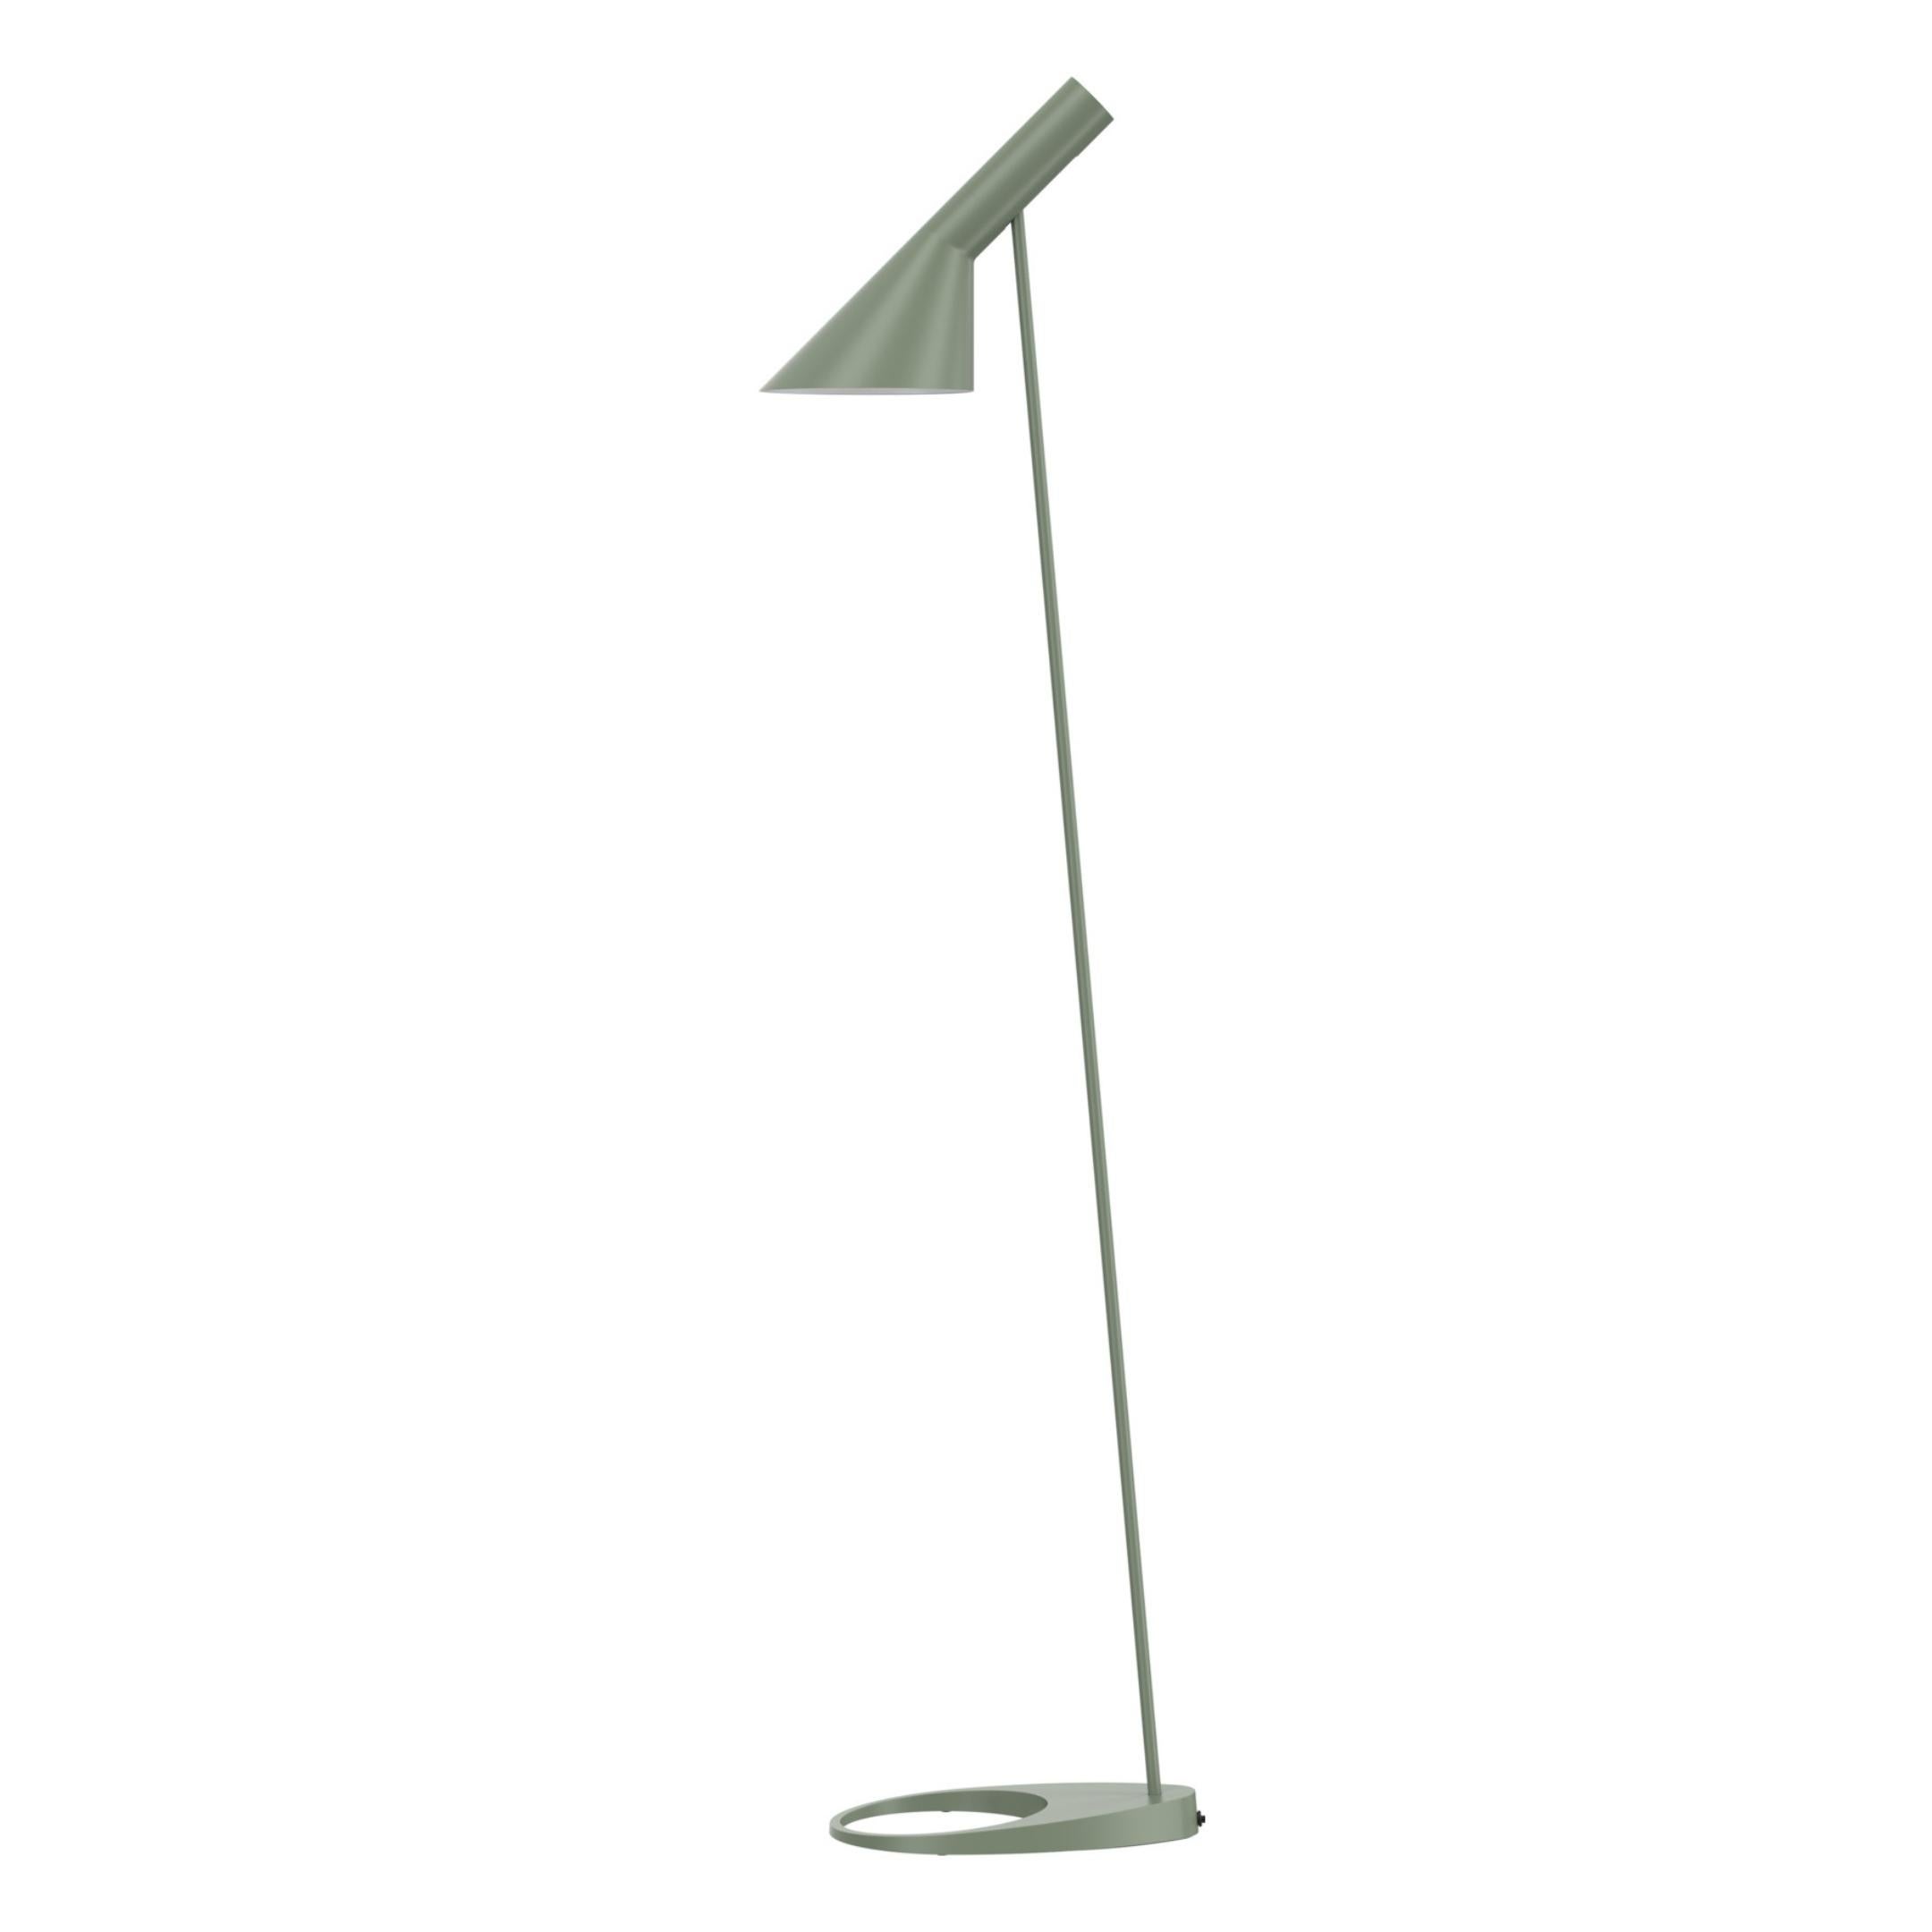 Arne Jacobsen AJ Floor Lamp in Pale Petroleum for Louis Poulsen For Sale 2